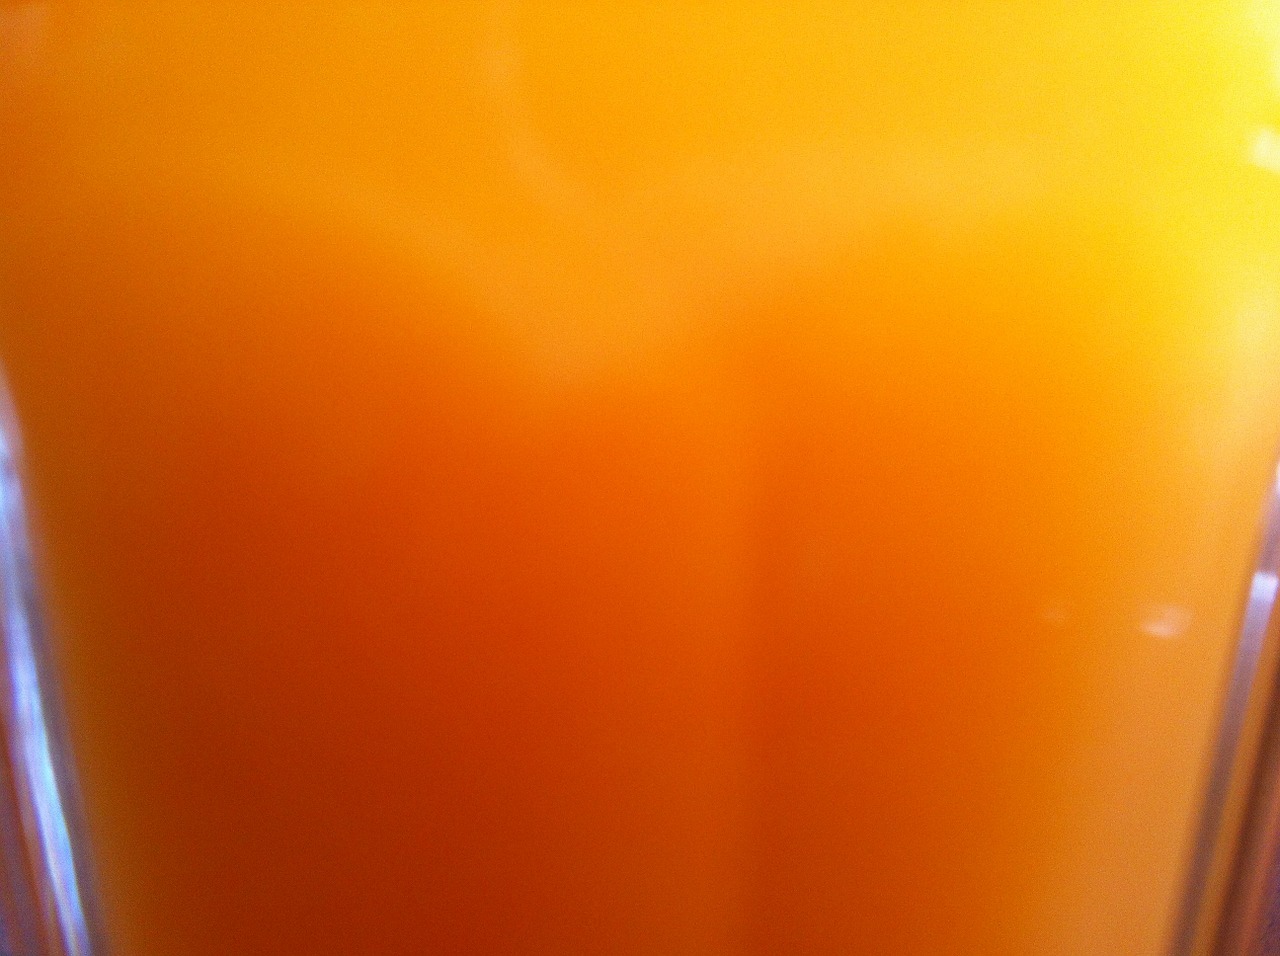 orange juice orange glass free photo